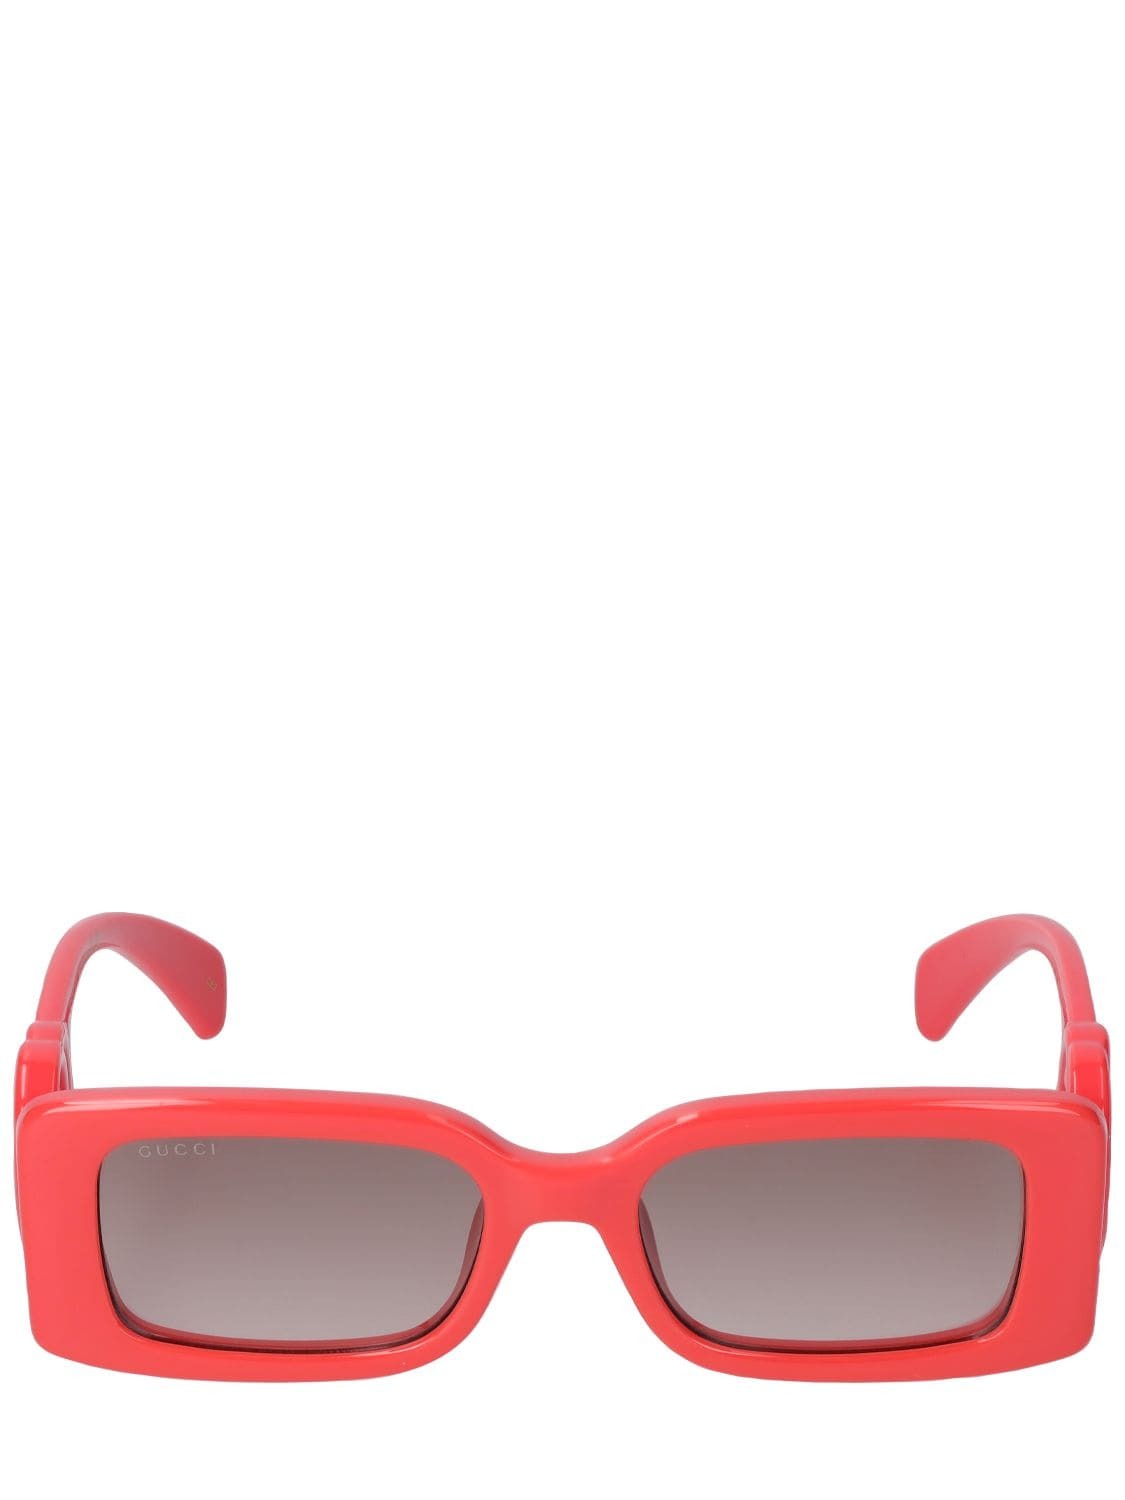 GUCCI Gg1325s Squared Acetate Sunglasses in red